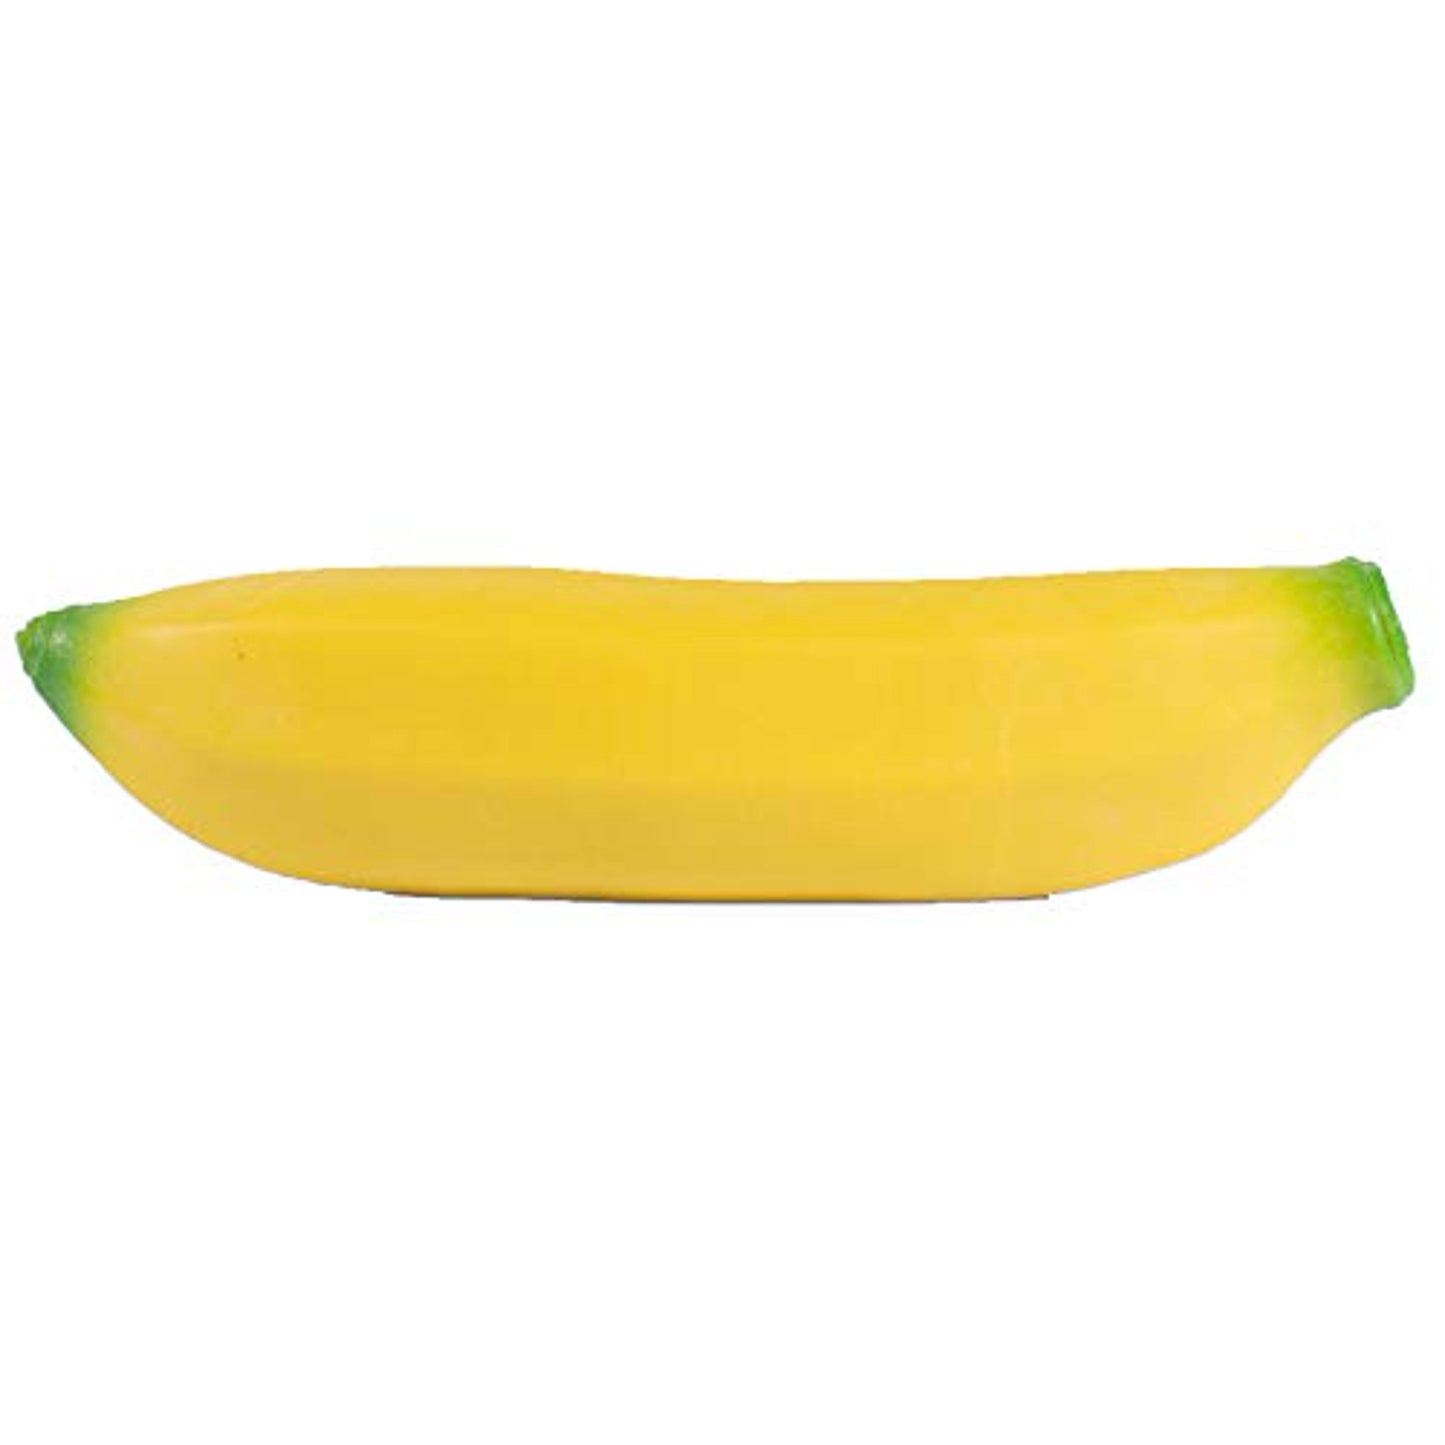 Super stretchy Banana